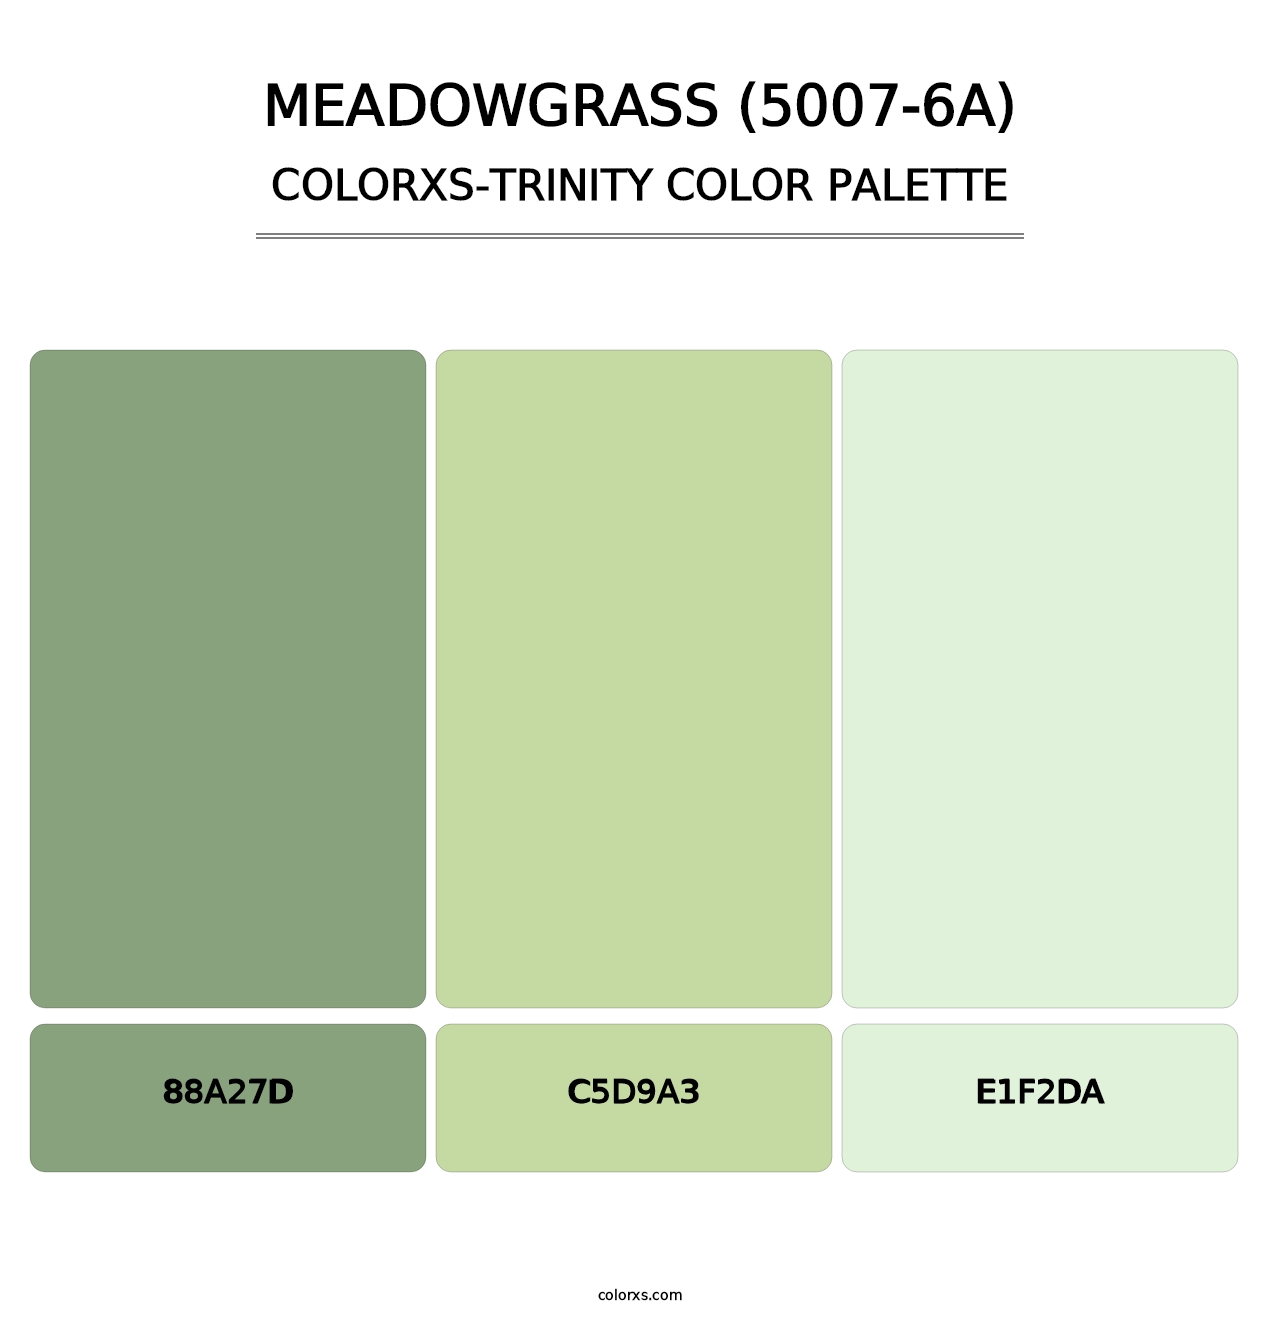 Meadowgrass (5007-6A) - Colorxs Trinity Palette